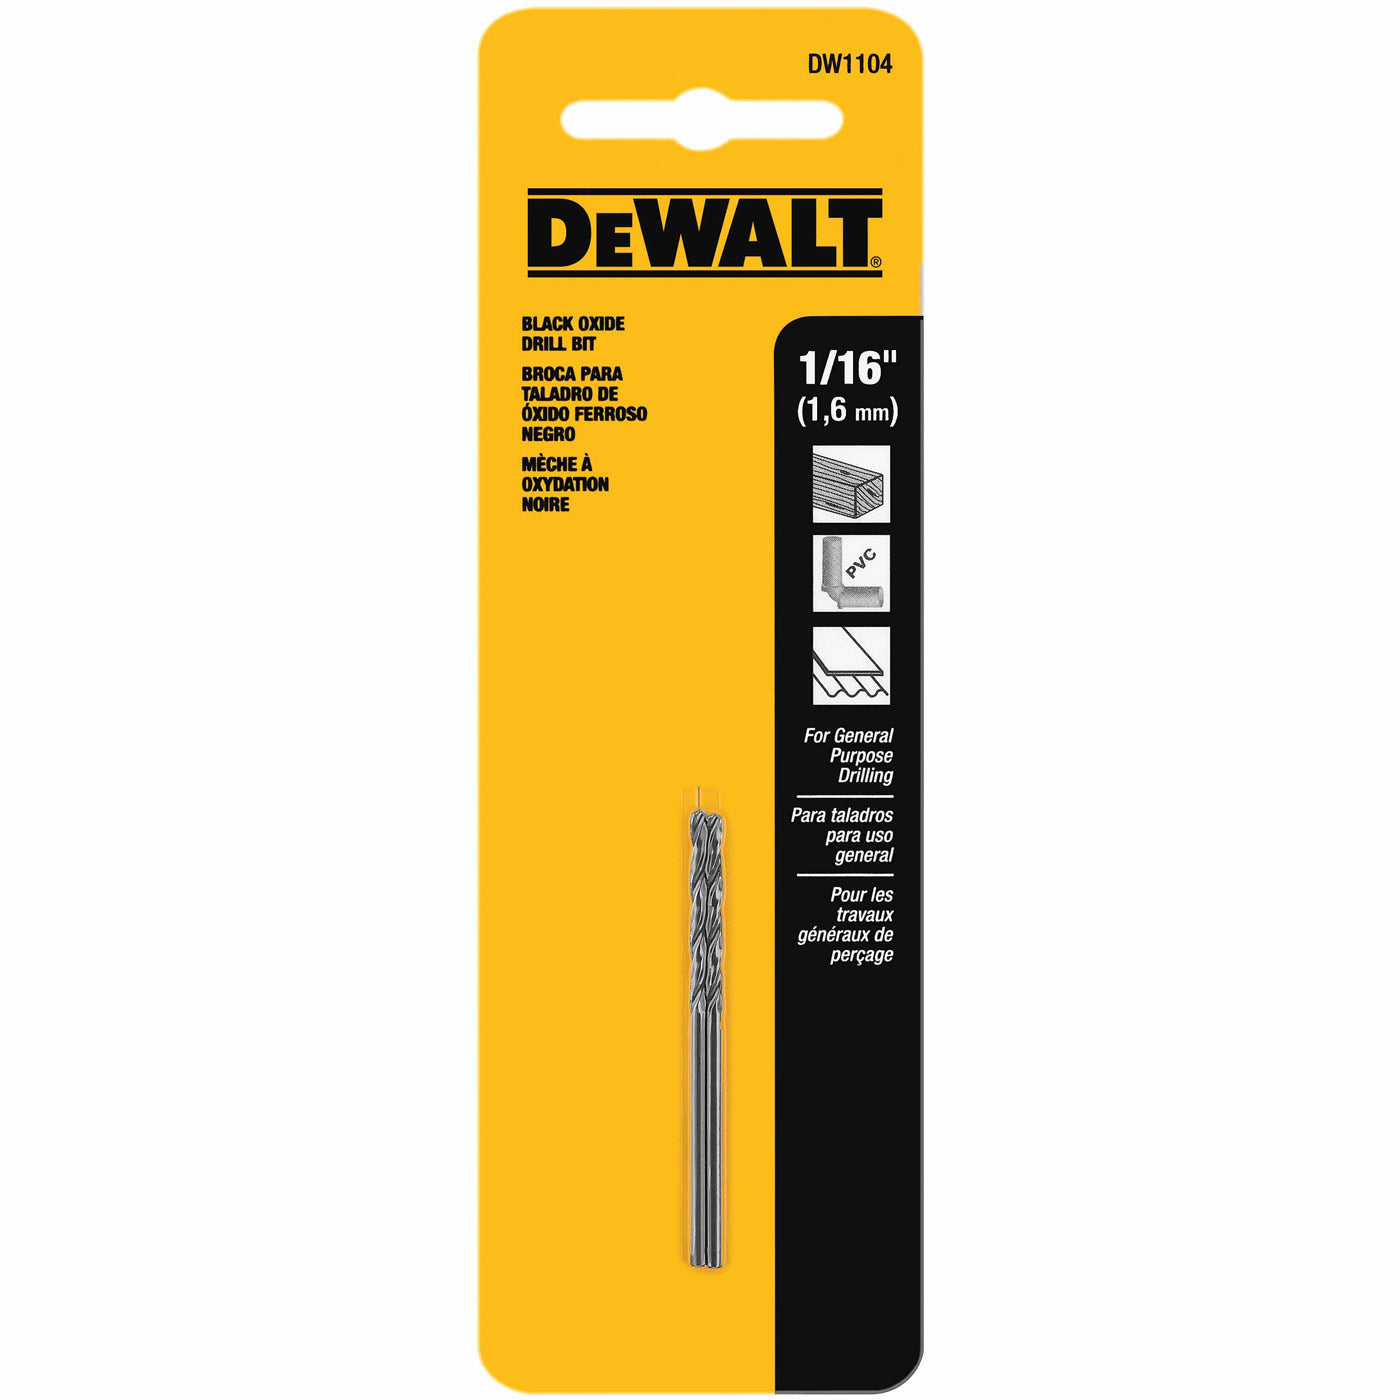 DeWalt DW1104 1/16" Black Oxide Split Point Drill Bit (2-Pack)